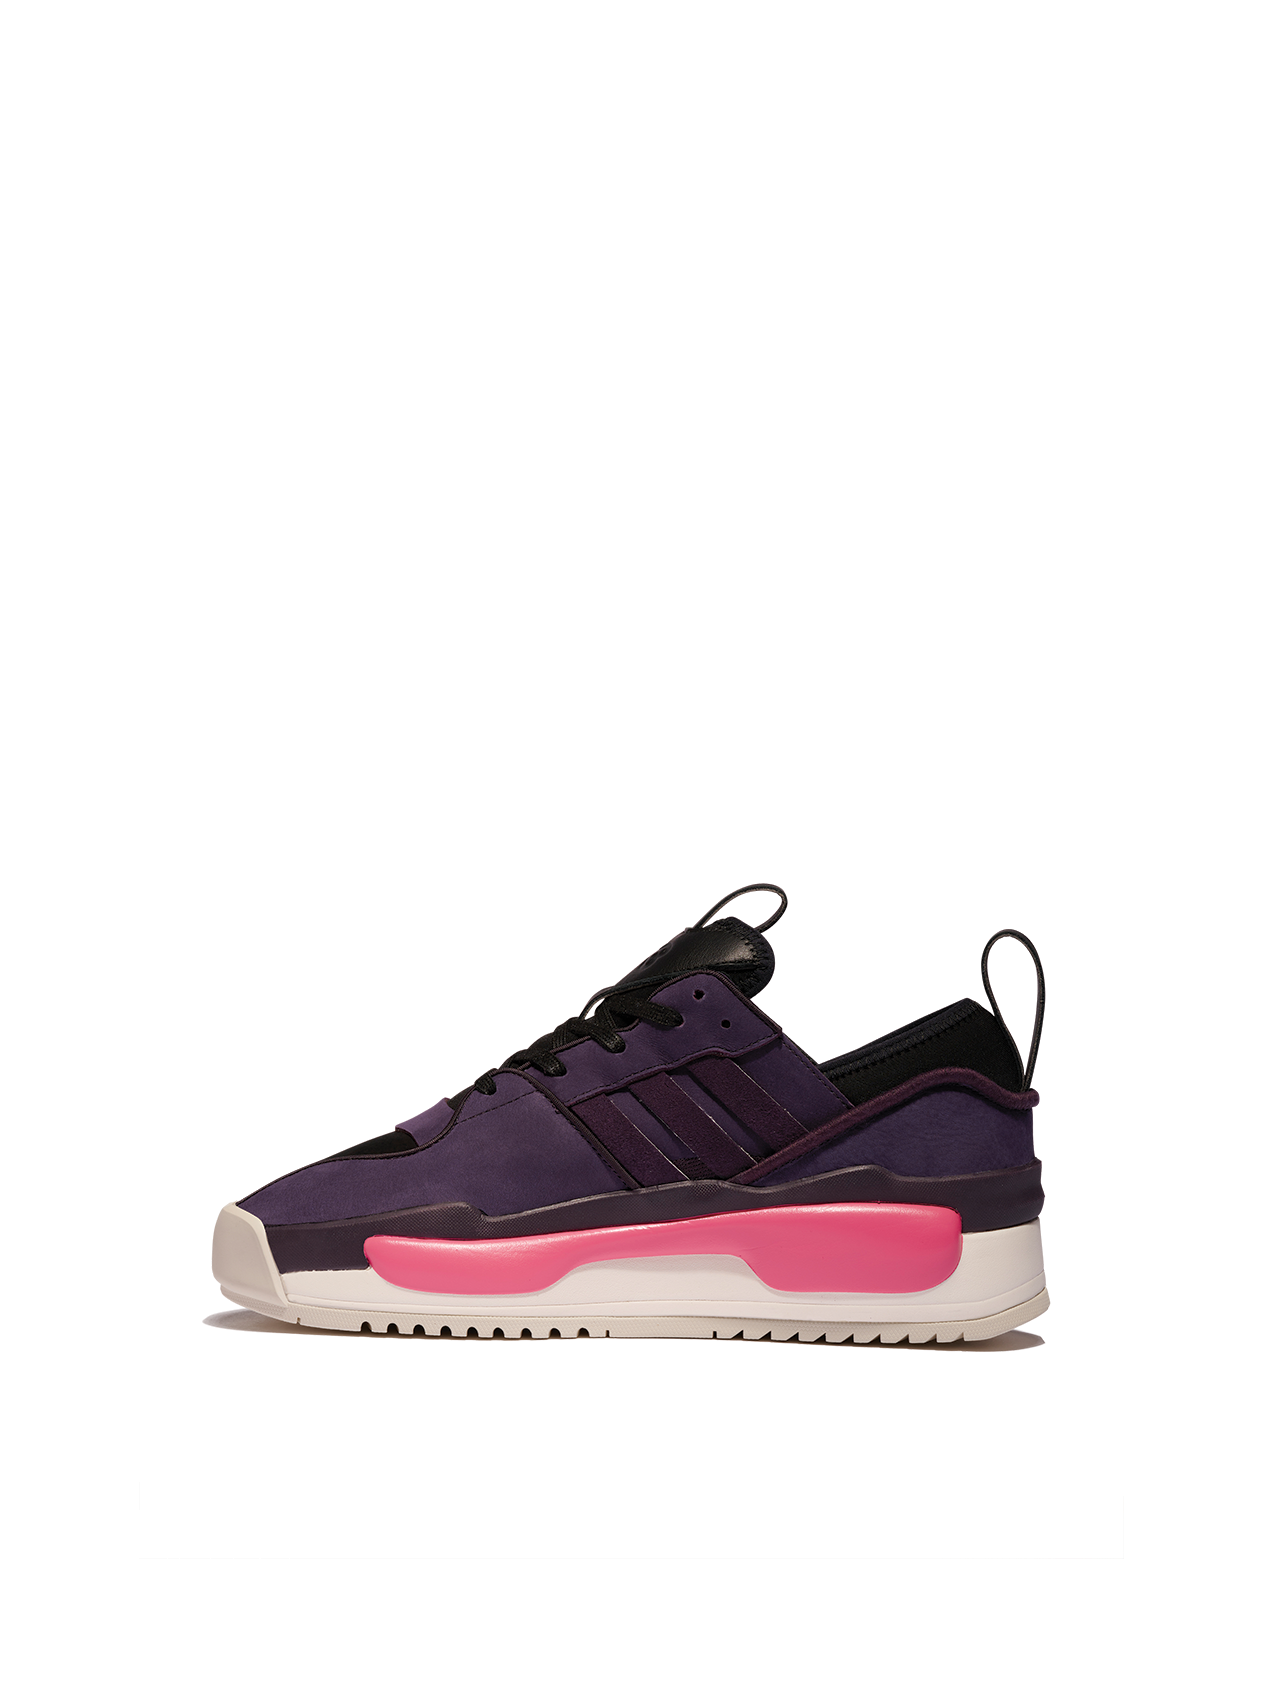 Y-3 Noble Purple/Black Rivalry Sneakers